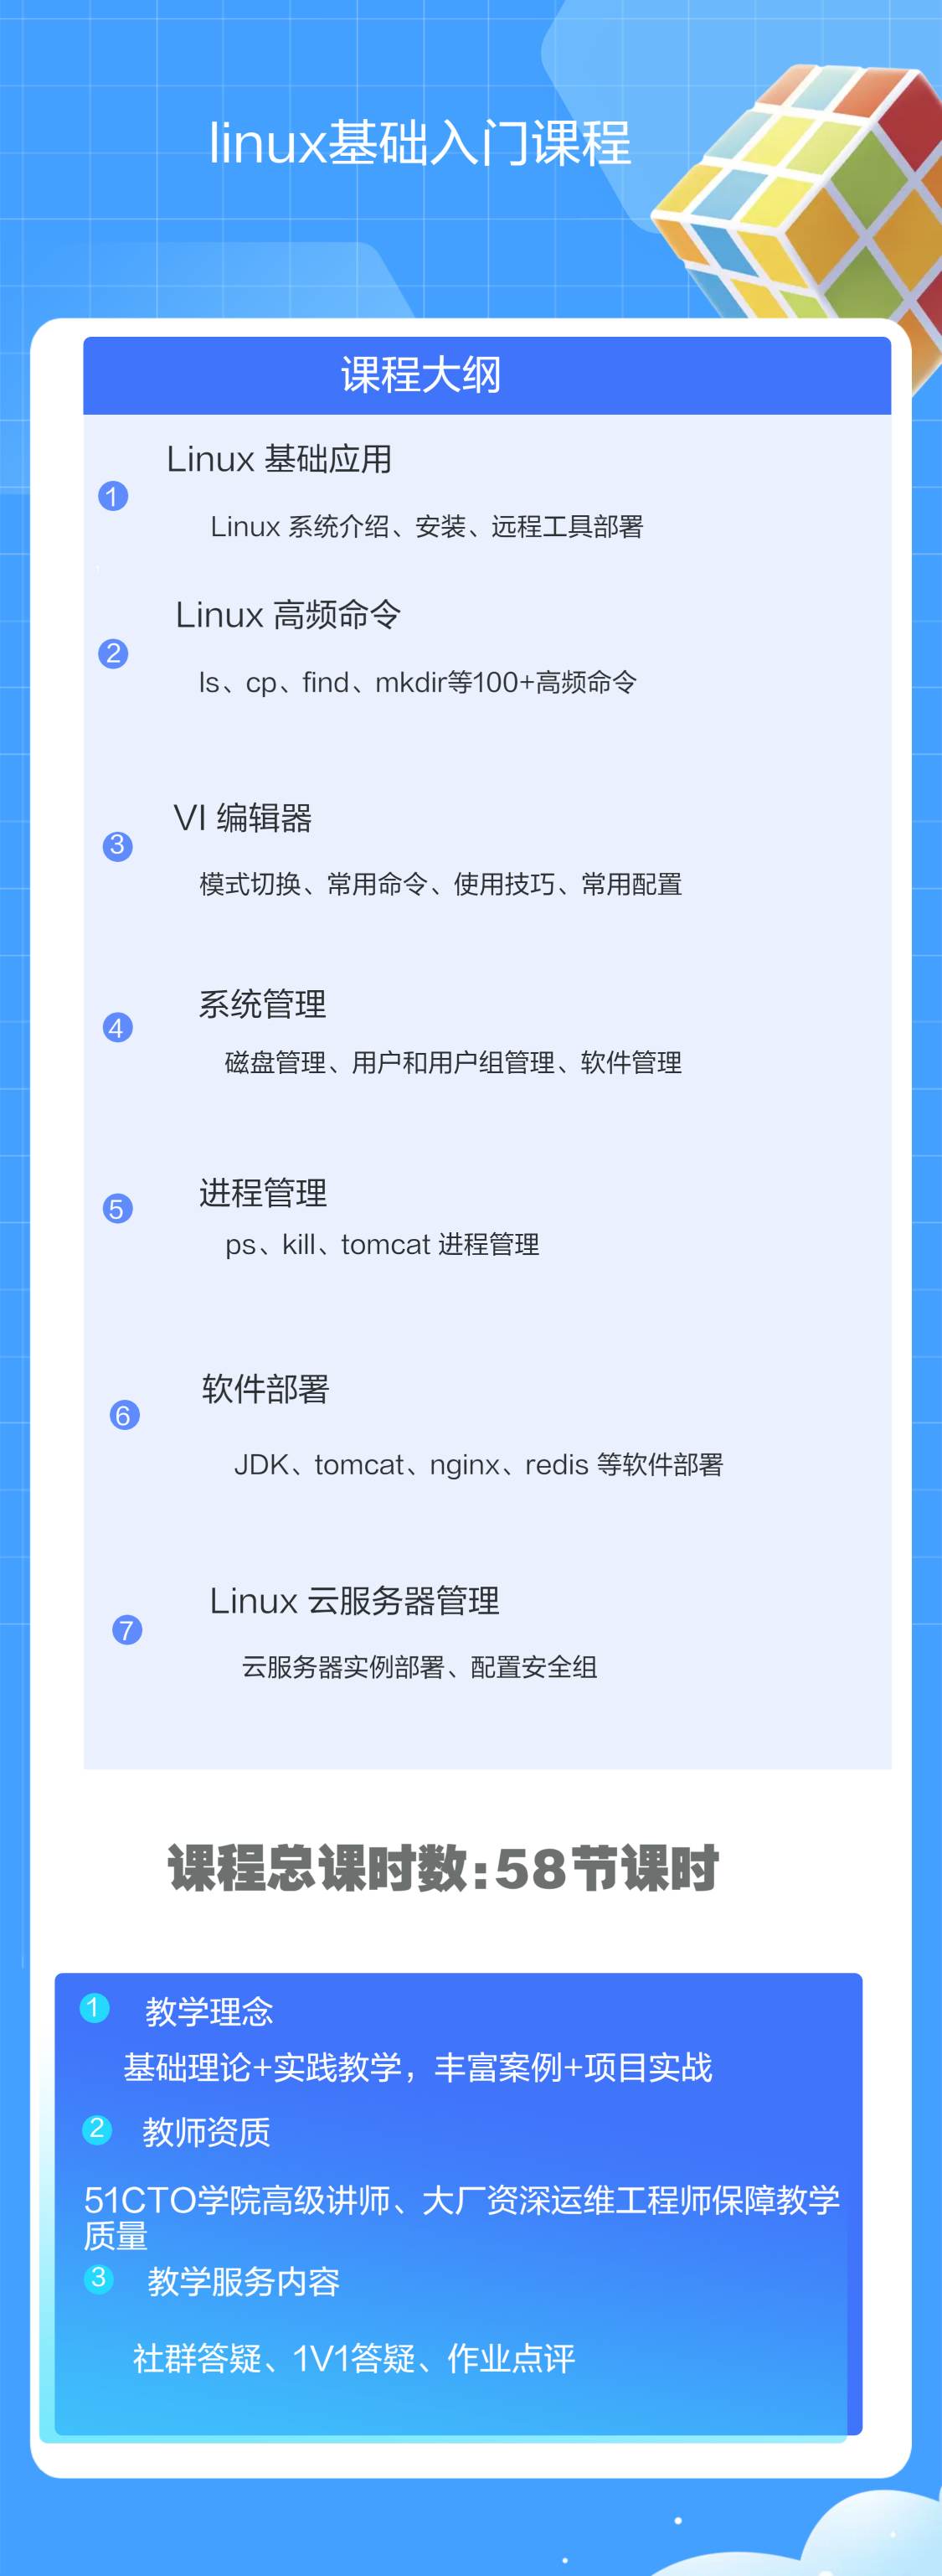 linux基础课程课程大纲.jpeg